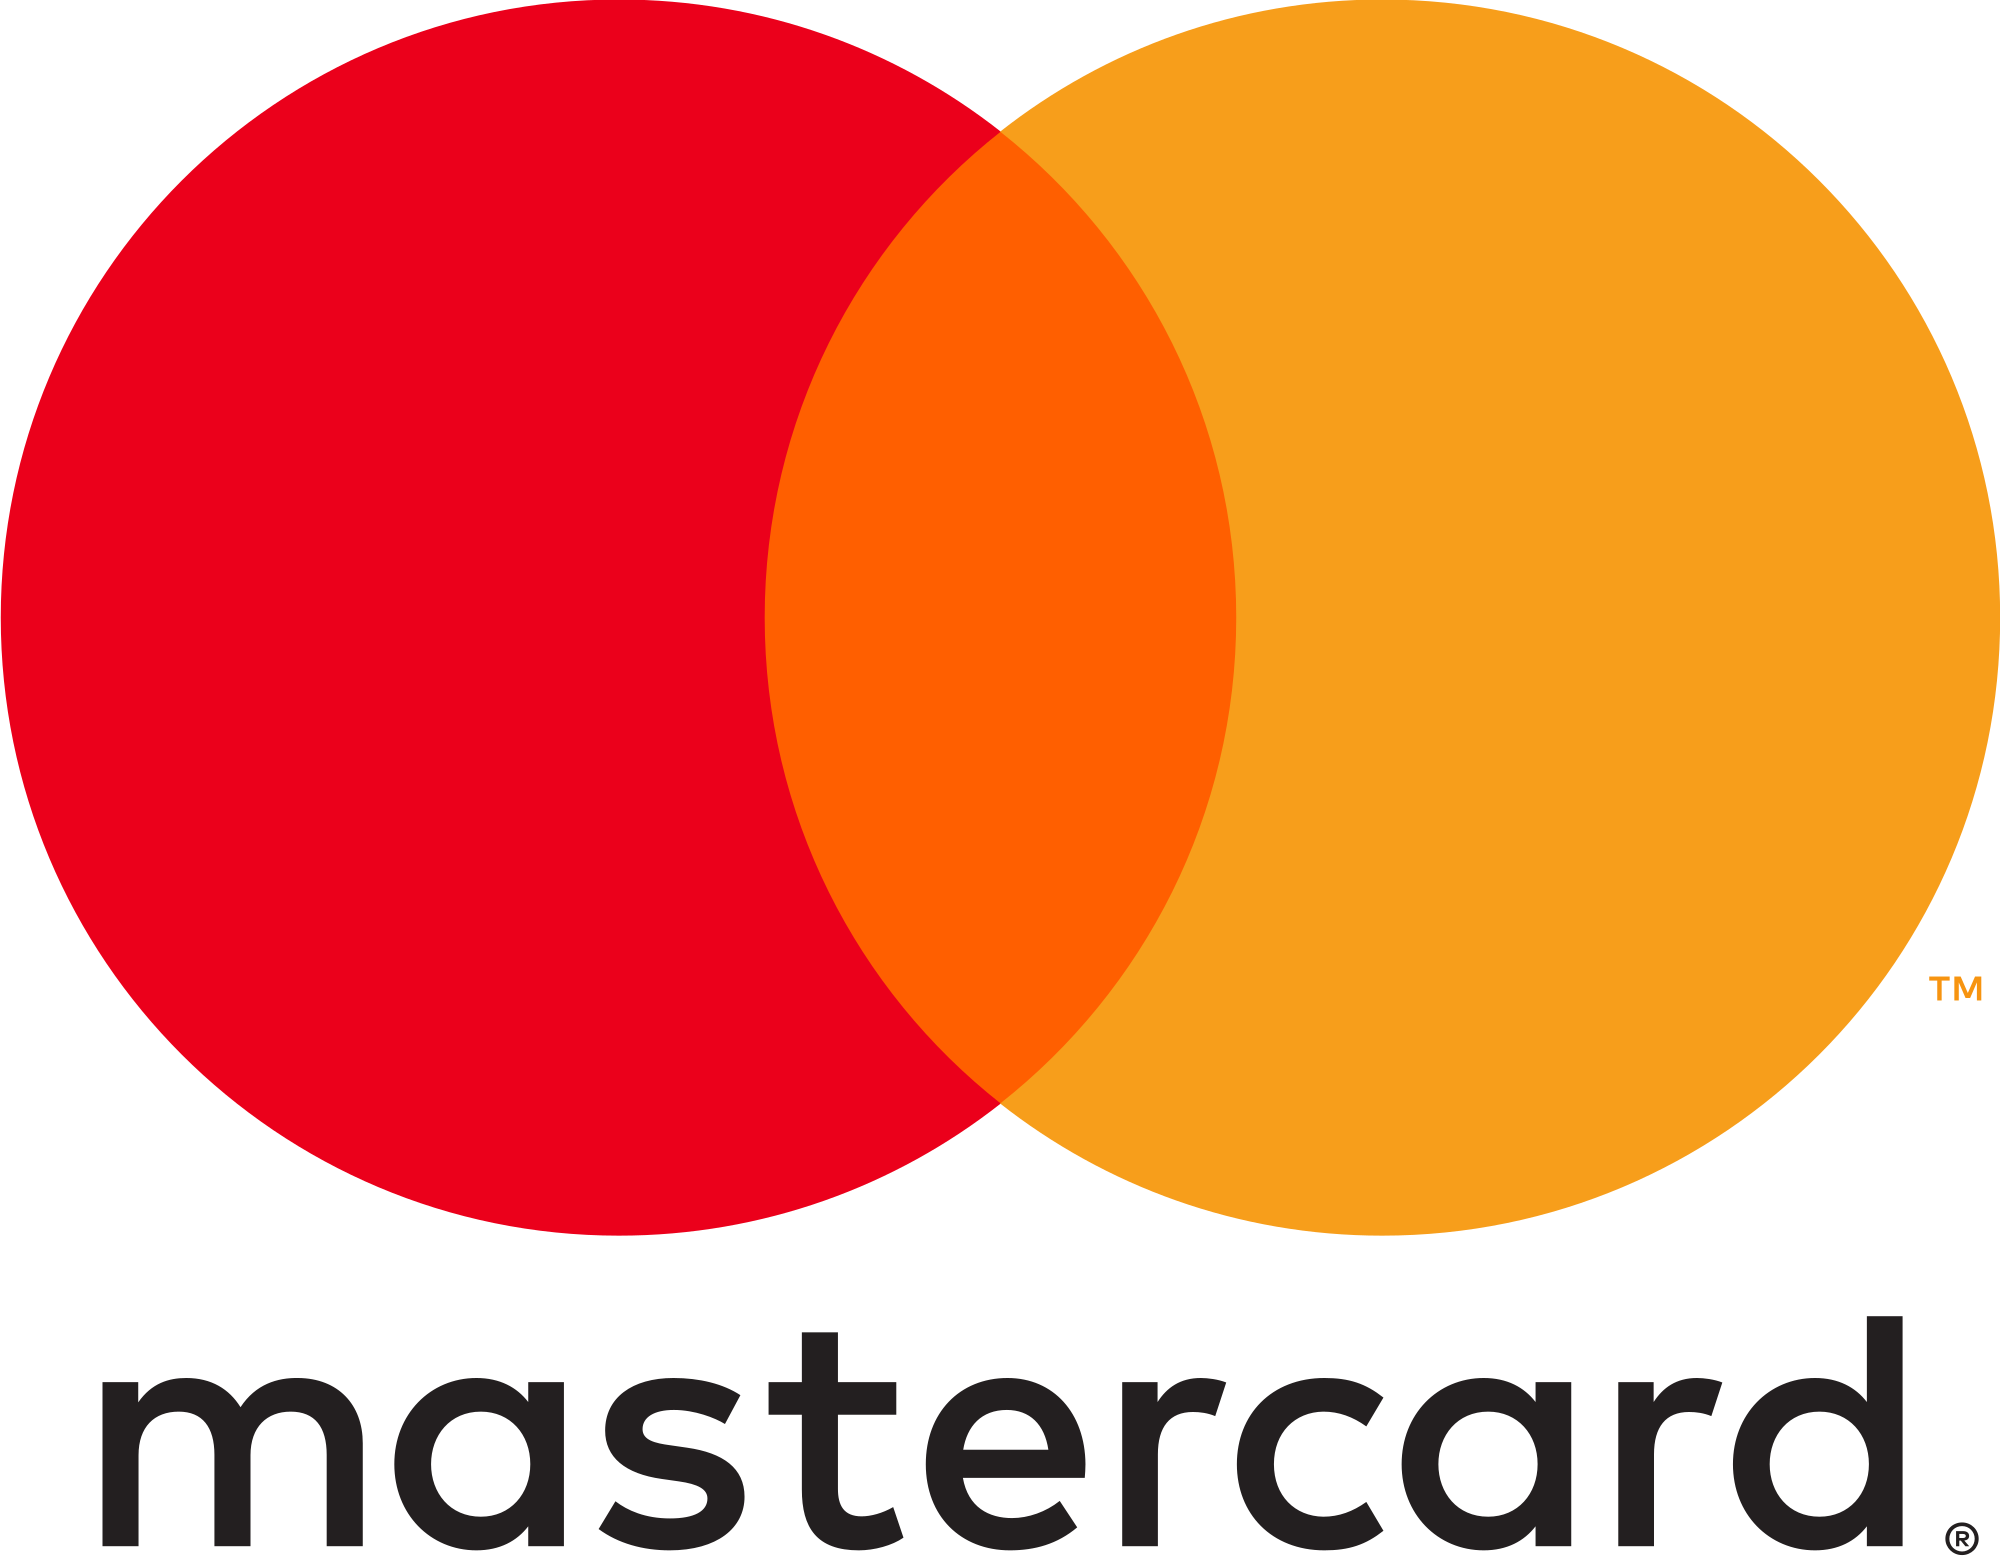 Mastercard Logo PNG Transparent Mastercard Logo.PNG Images. | PlusPNG